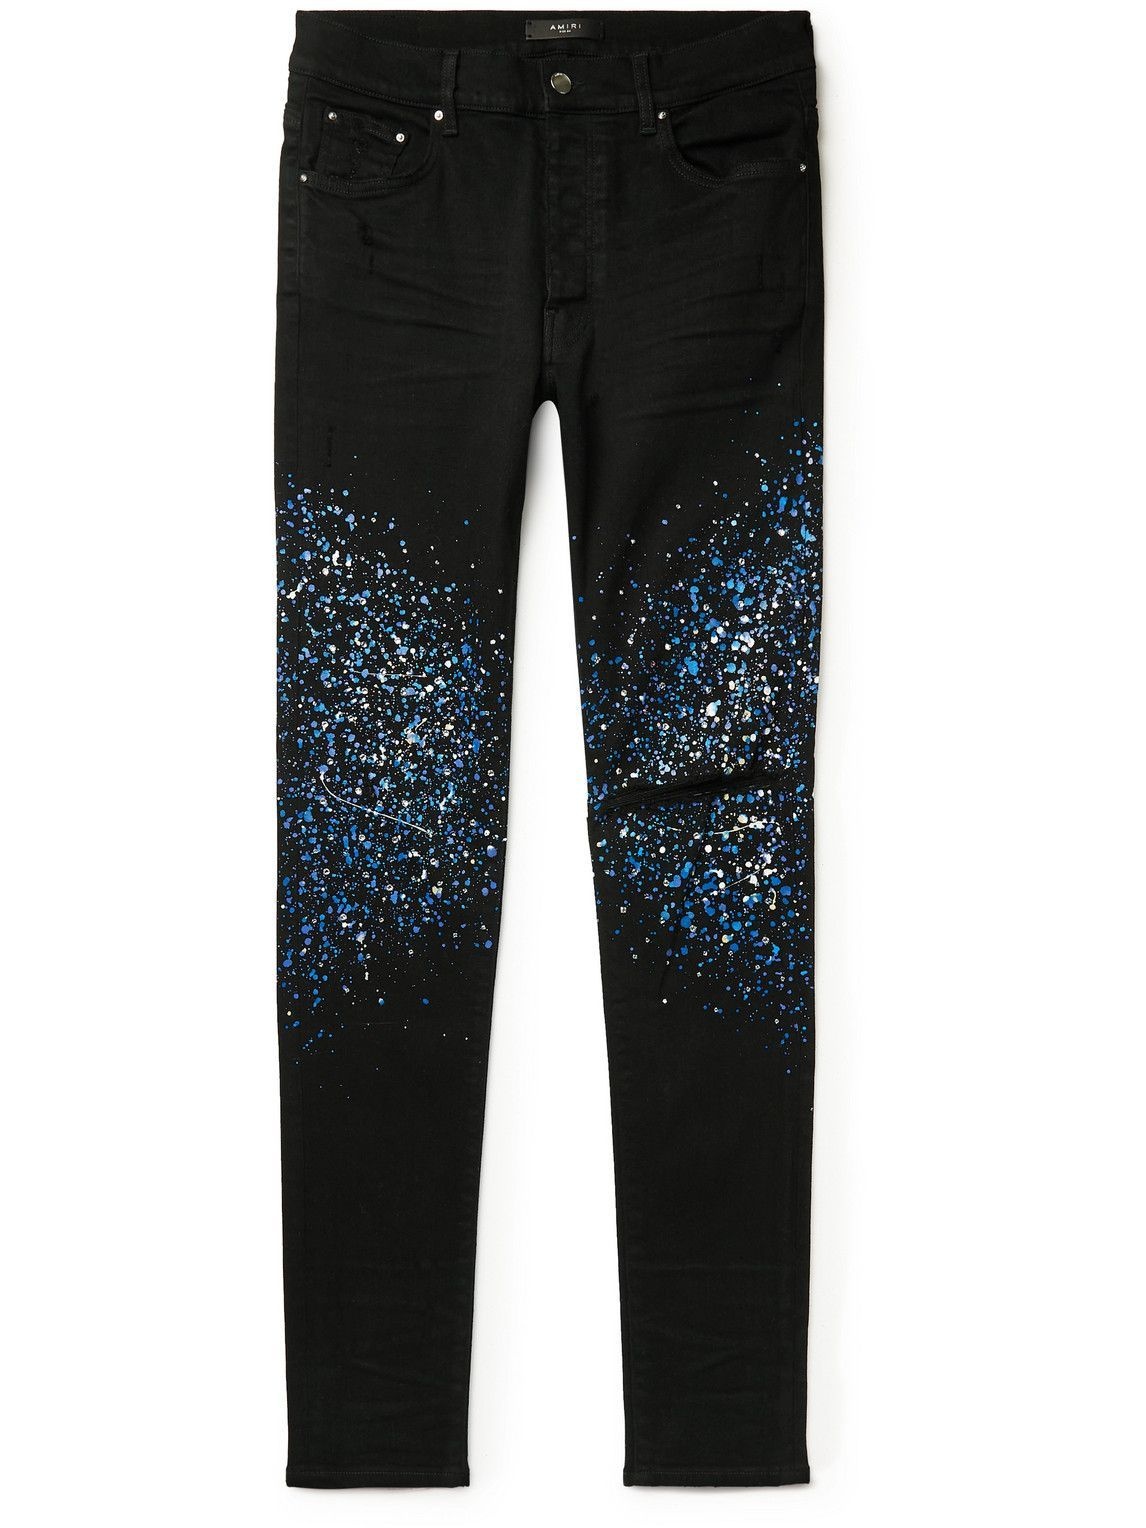 AMIRI - Skinny-Fit Distressed Crystal-Embellished Paint-Splattered Jeans -  Black